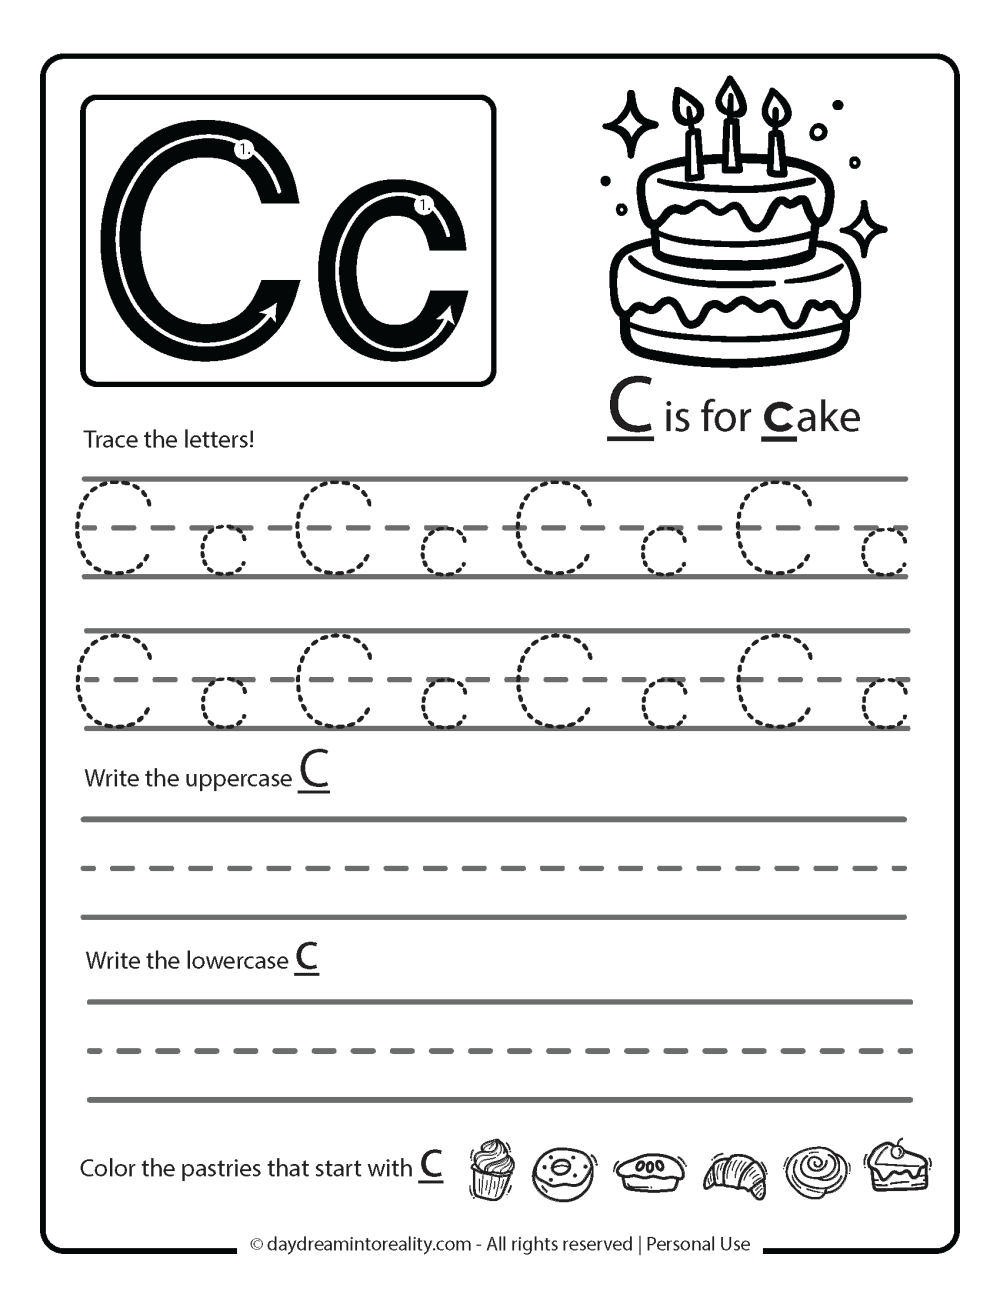 Letter C worksheet free printable - c is for cake